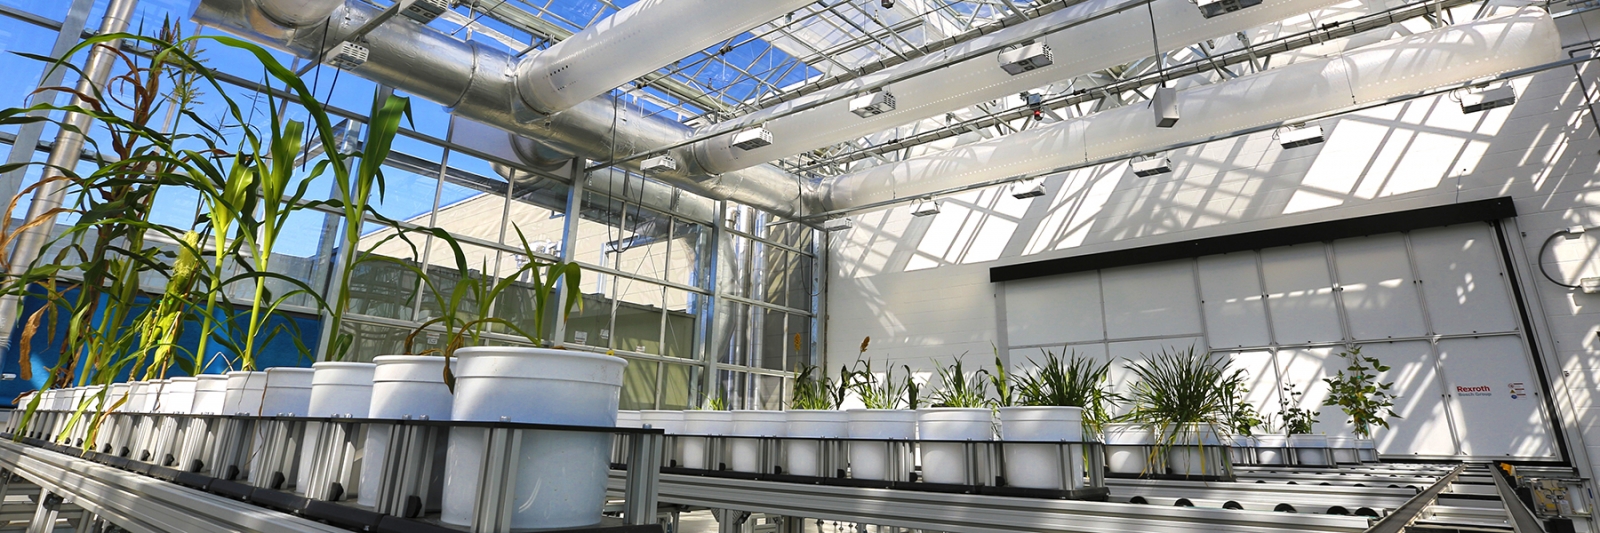 NIC greenhouse